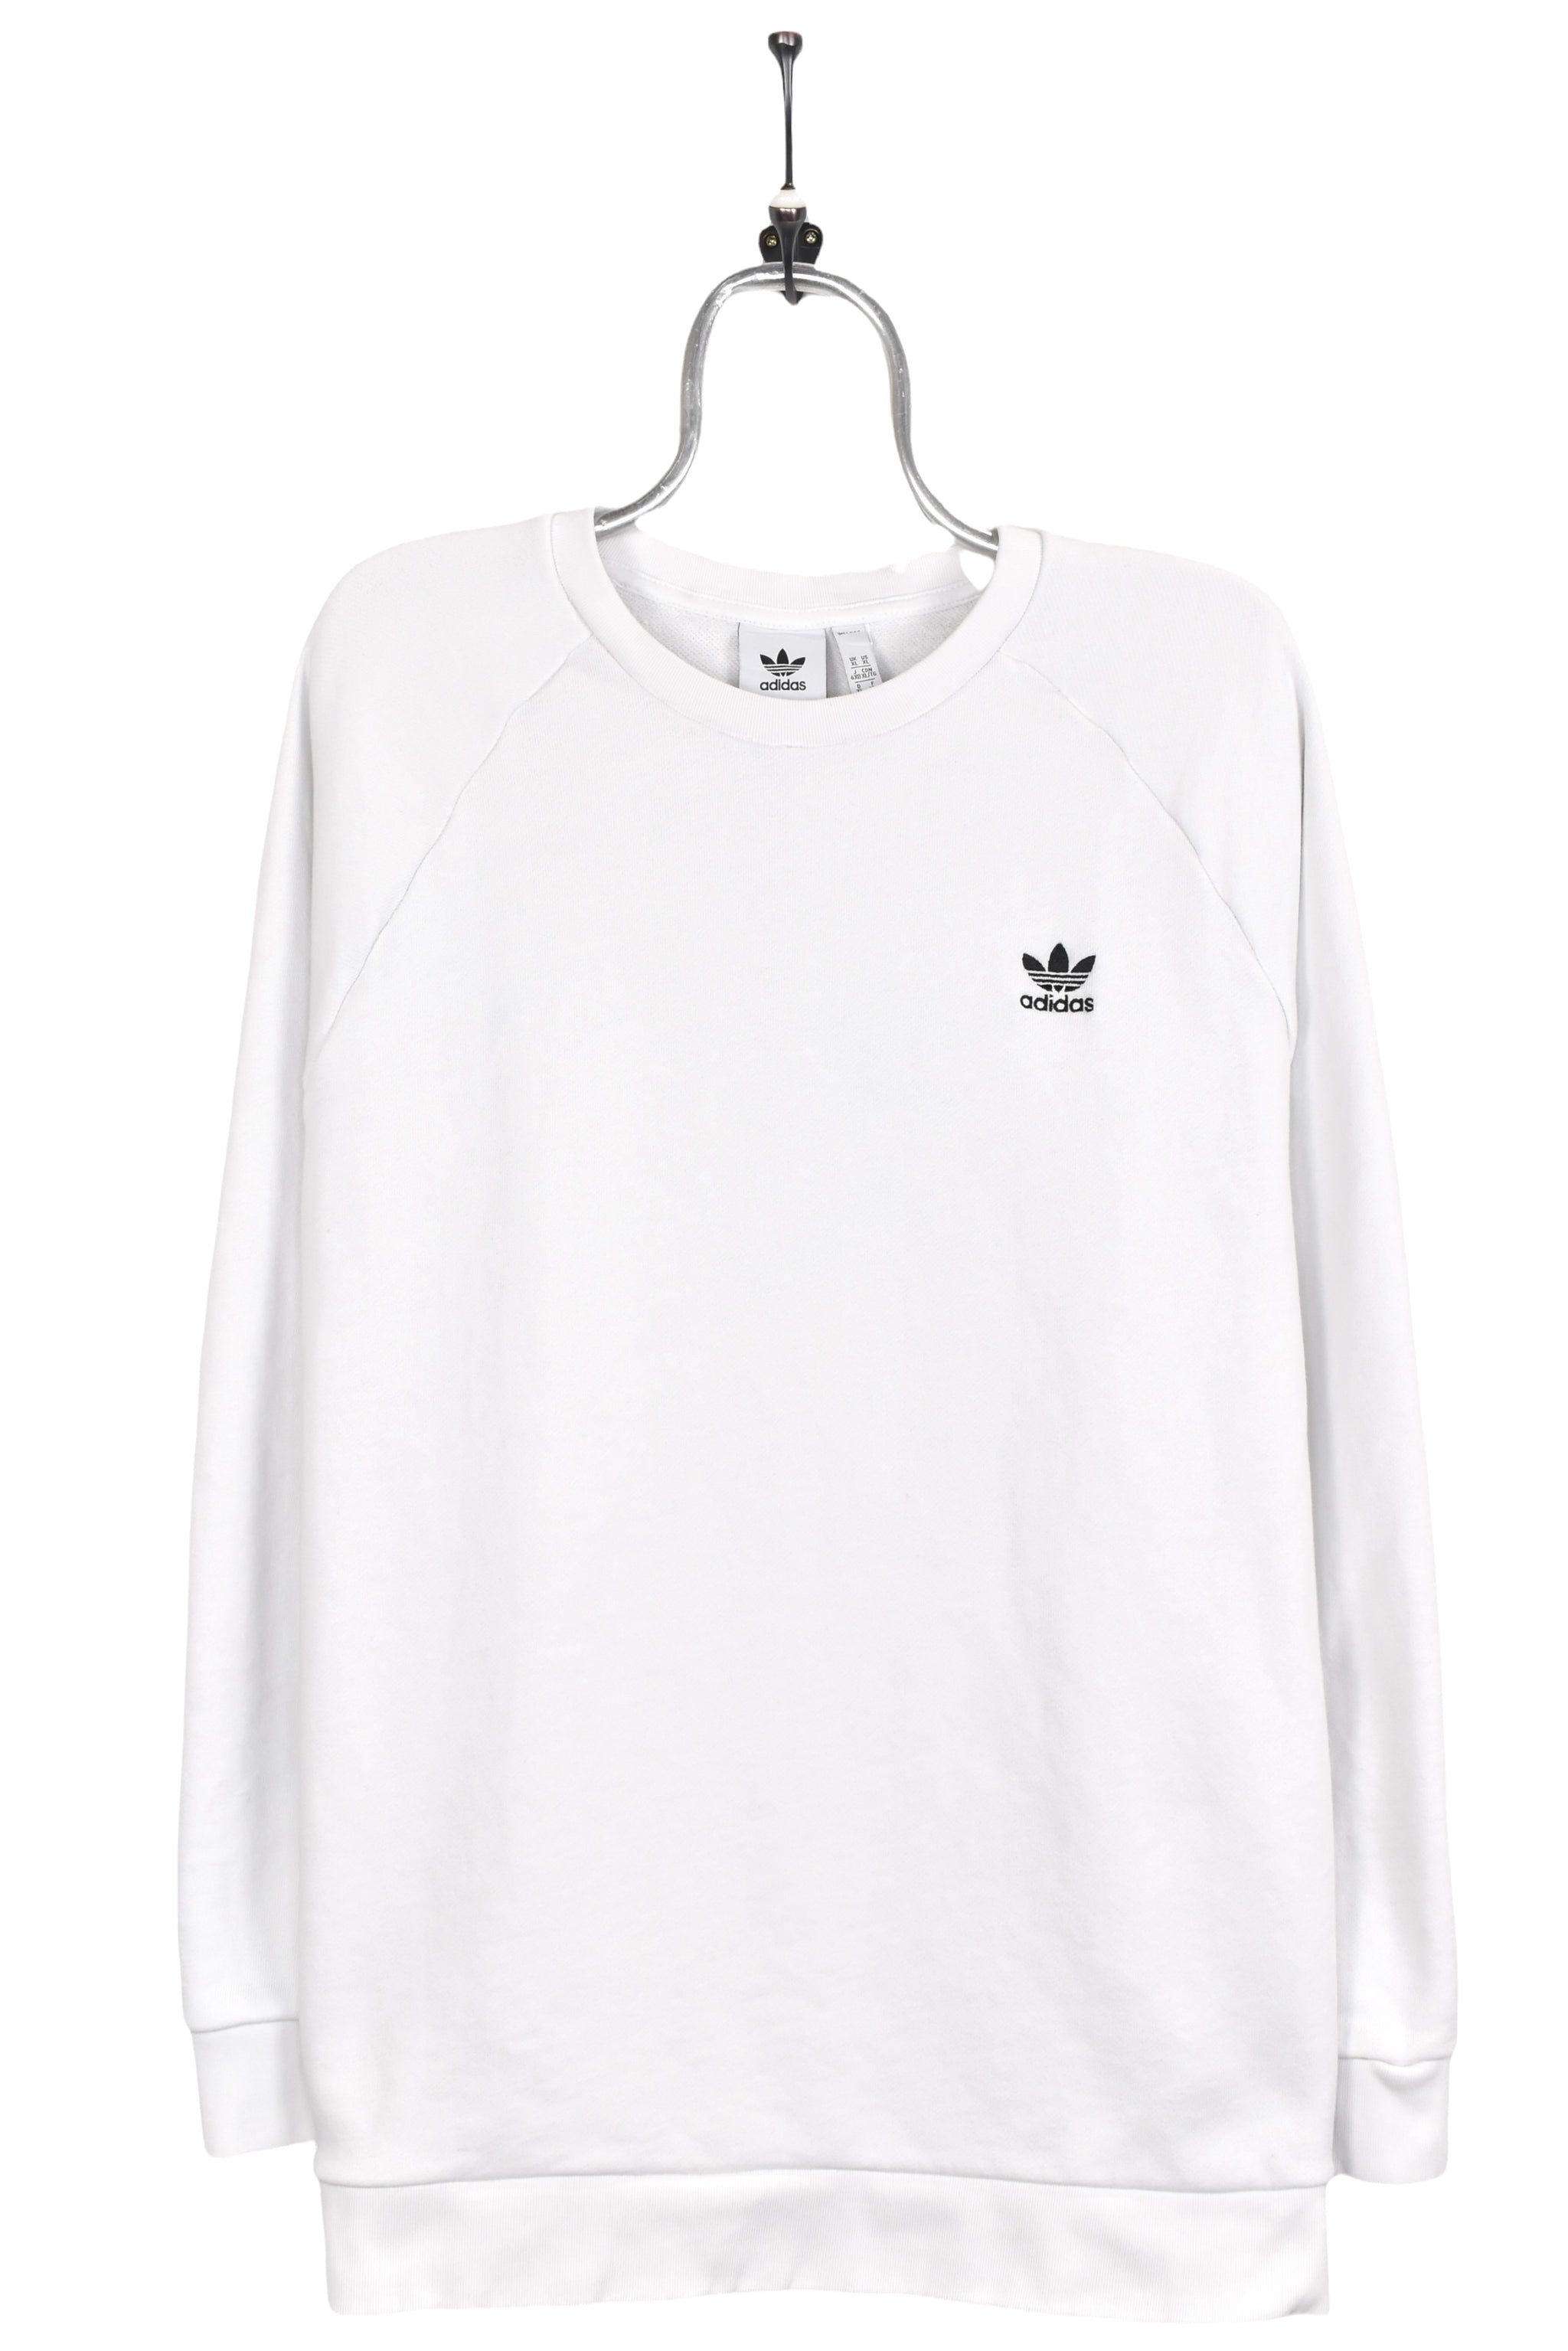 Vintage Adidas sweatshirt, white embroidered crewneck - AU XL